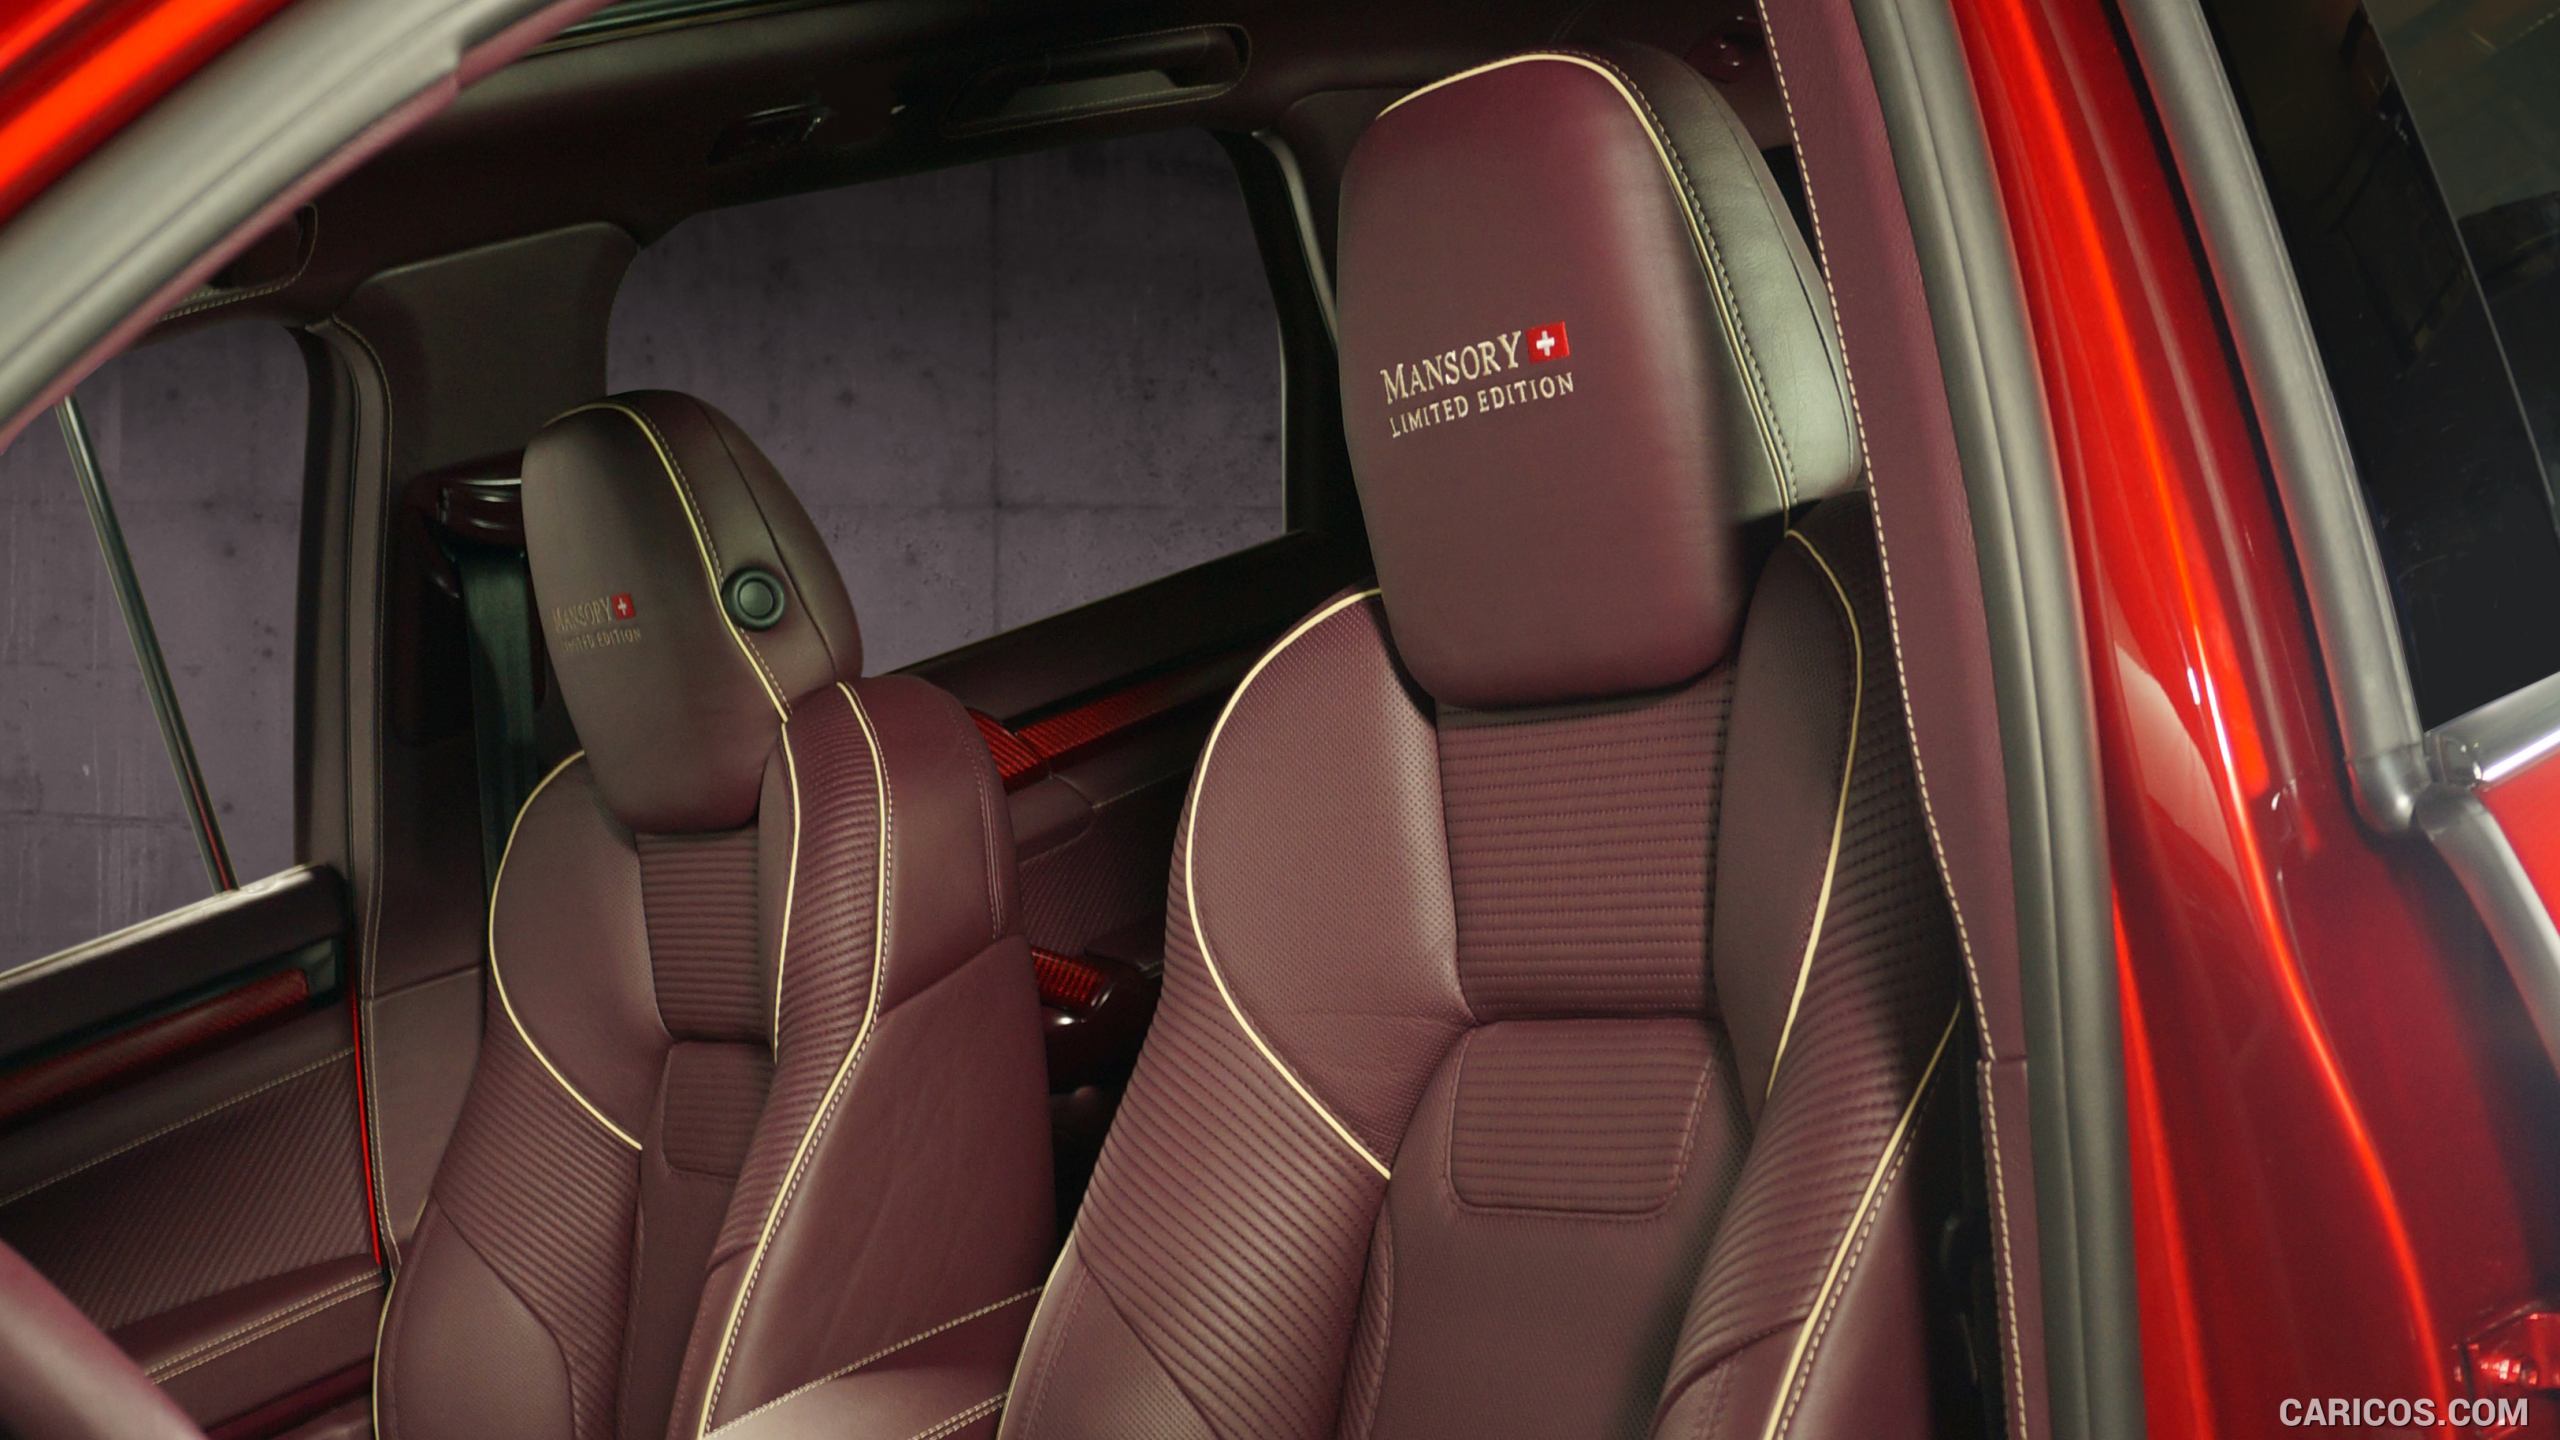 2015 Mansory Porsche Cayenne Turbo - Interior Front Seats, #4 of 15